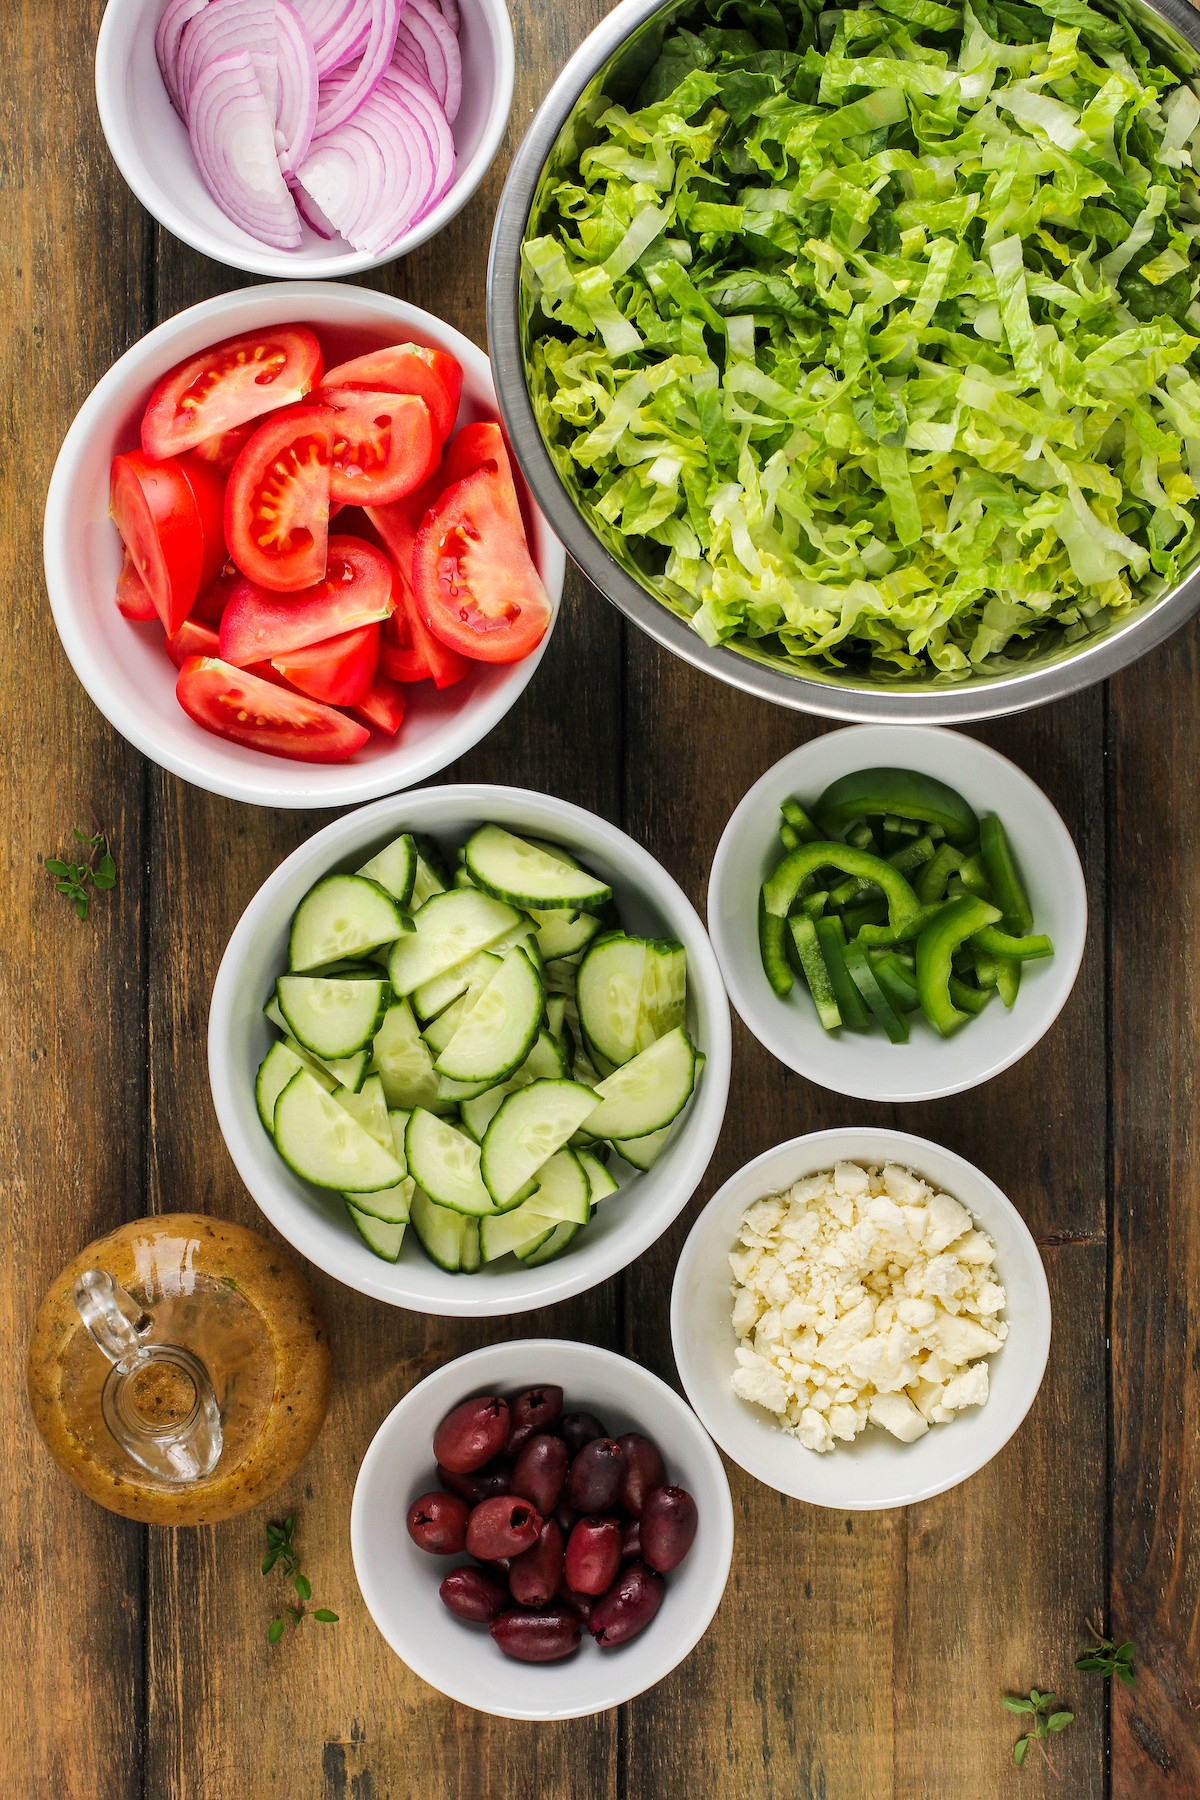 Ingredients for Greek salad.